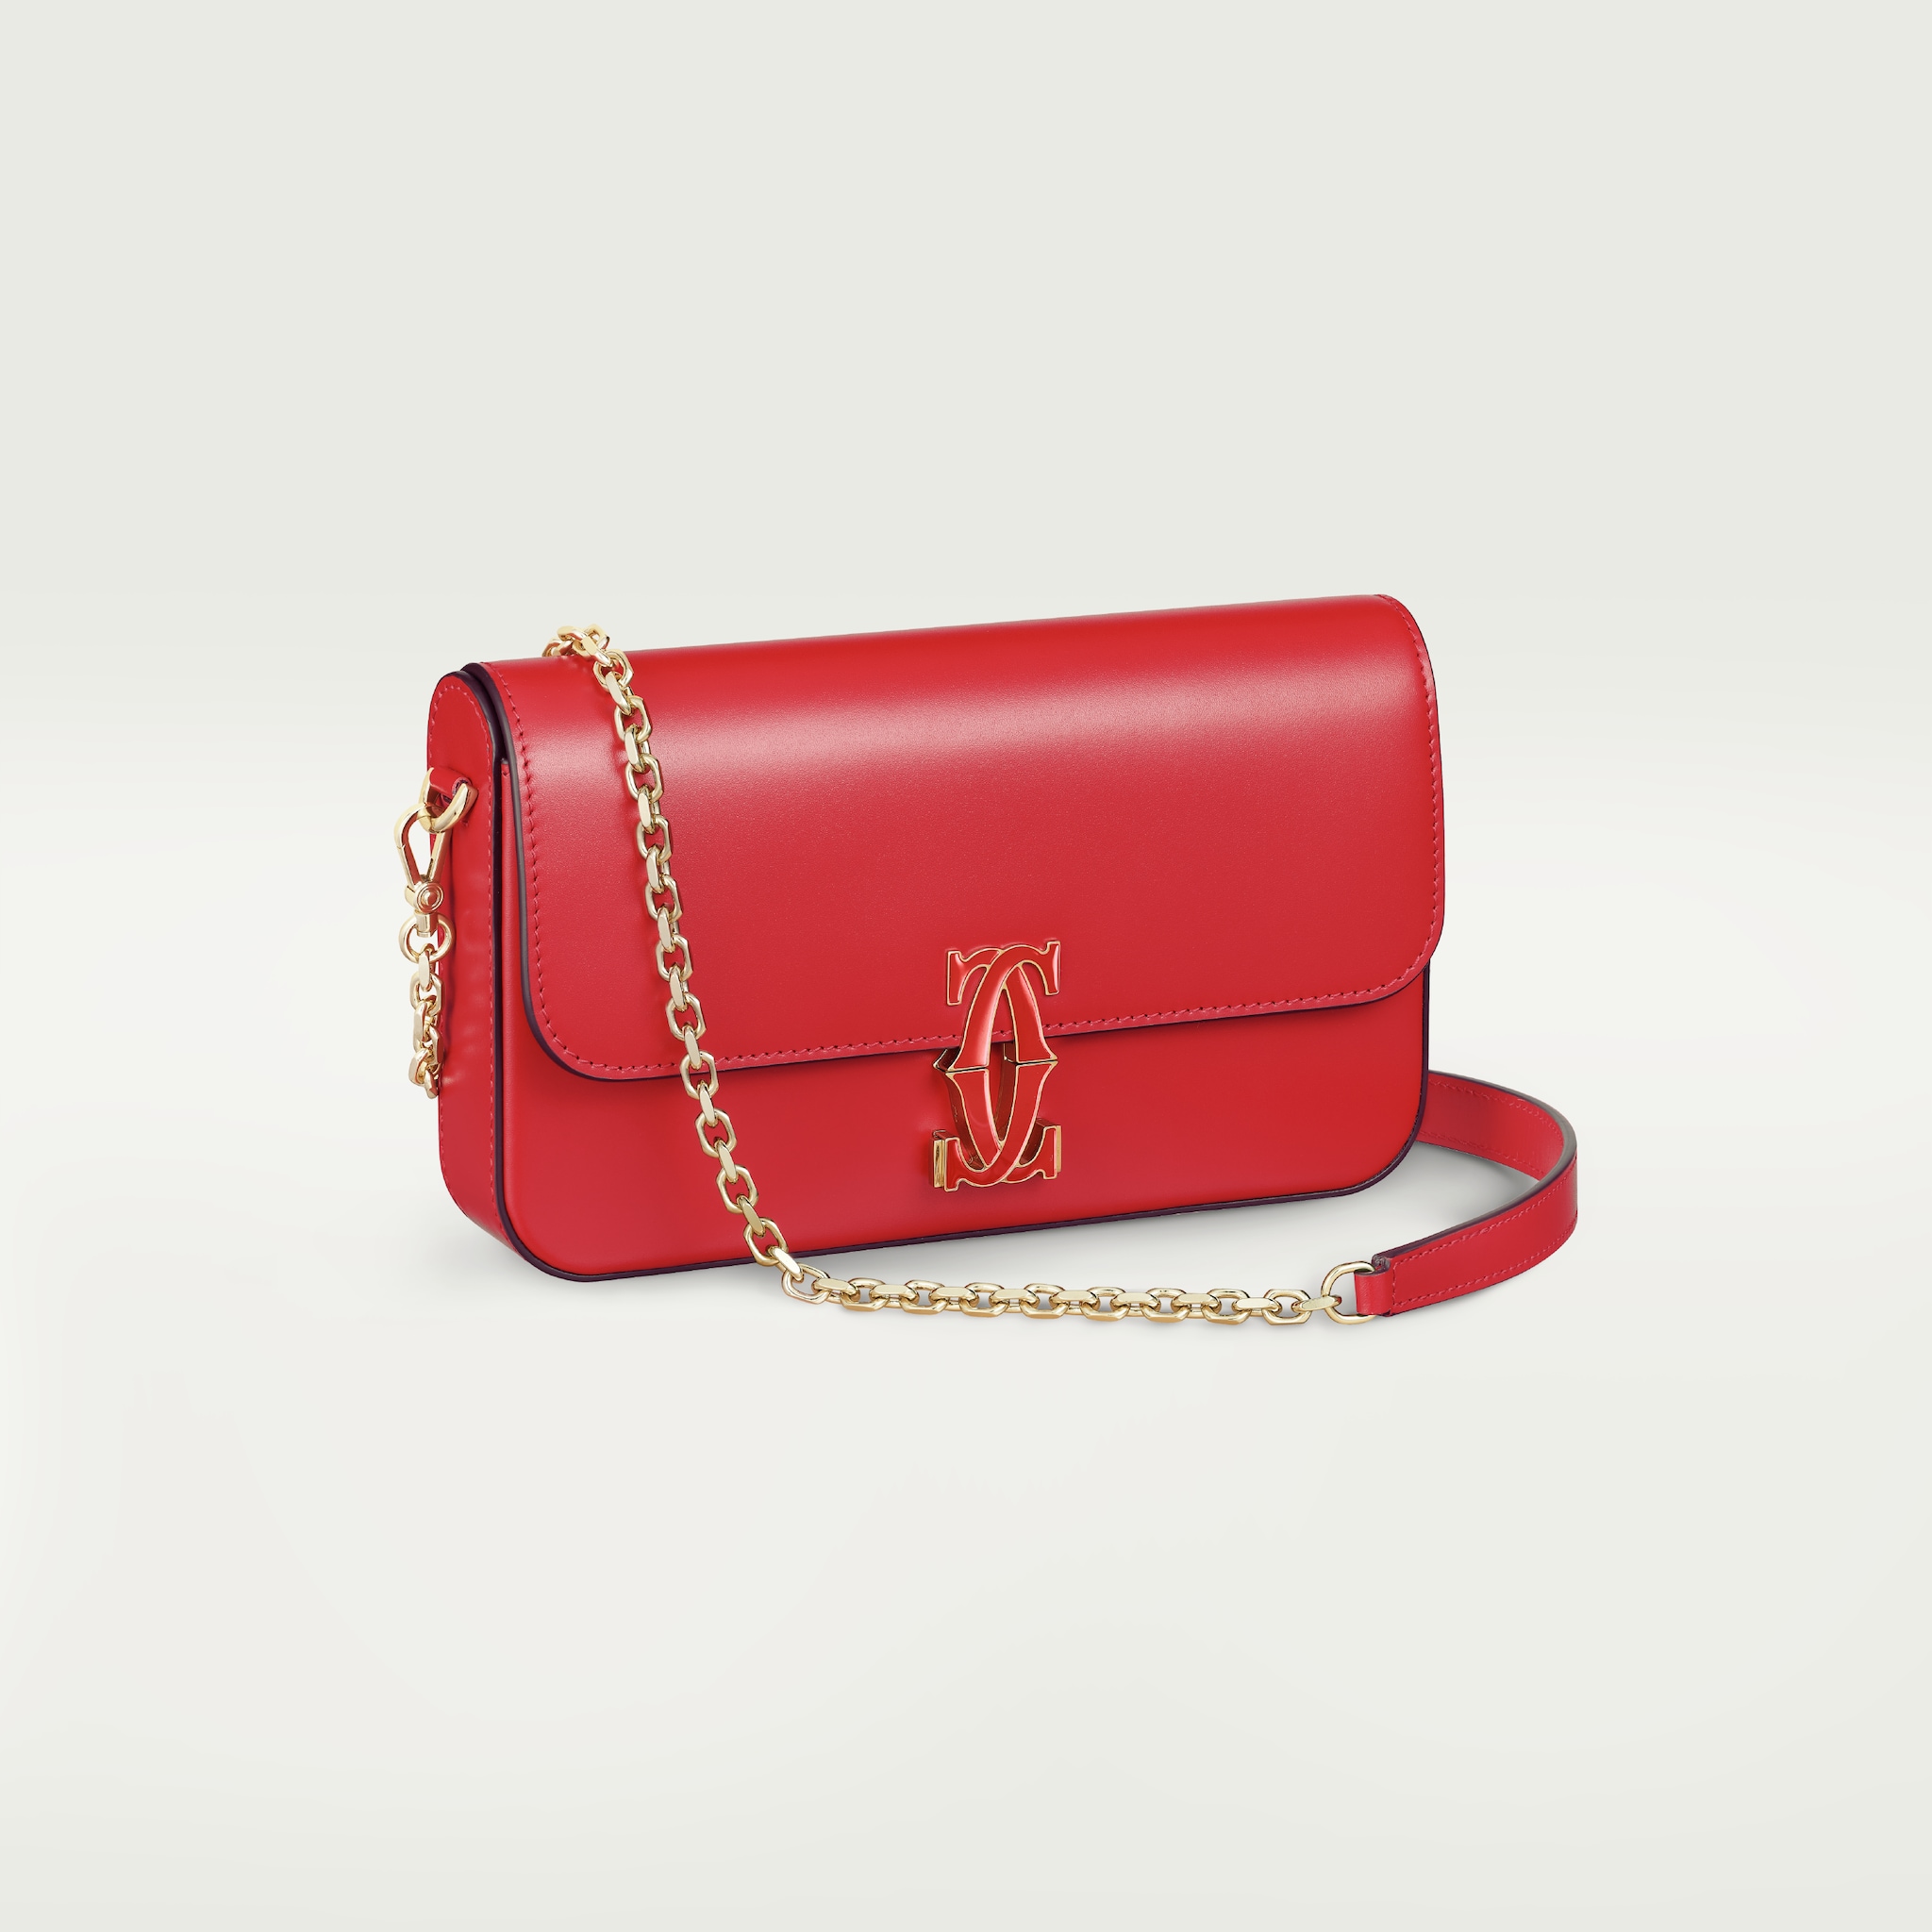 Mini model chain bag, C de CartierRed calfskin, golden finish and red enamel